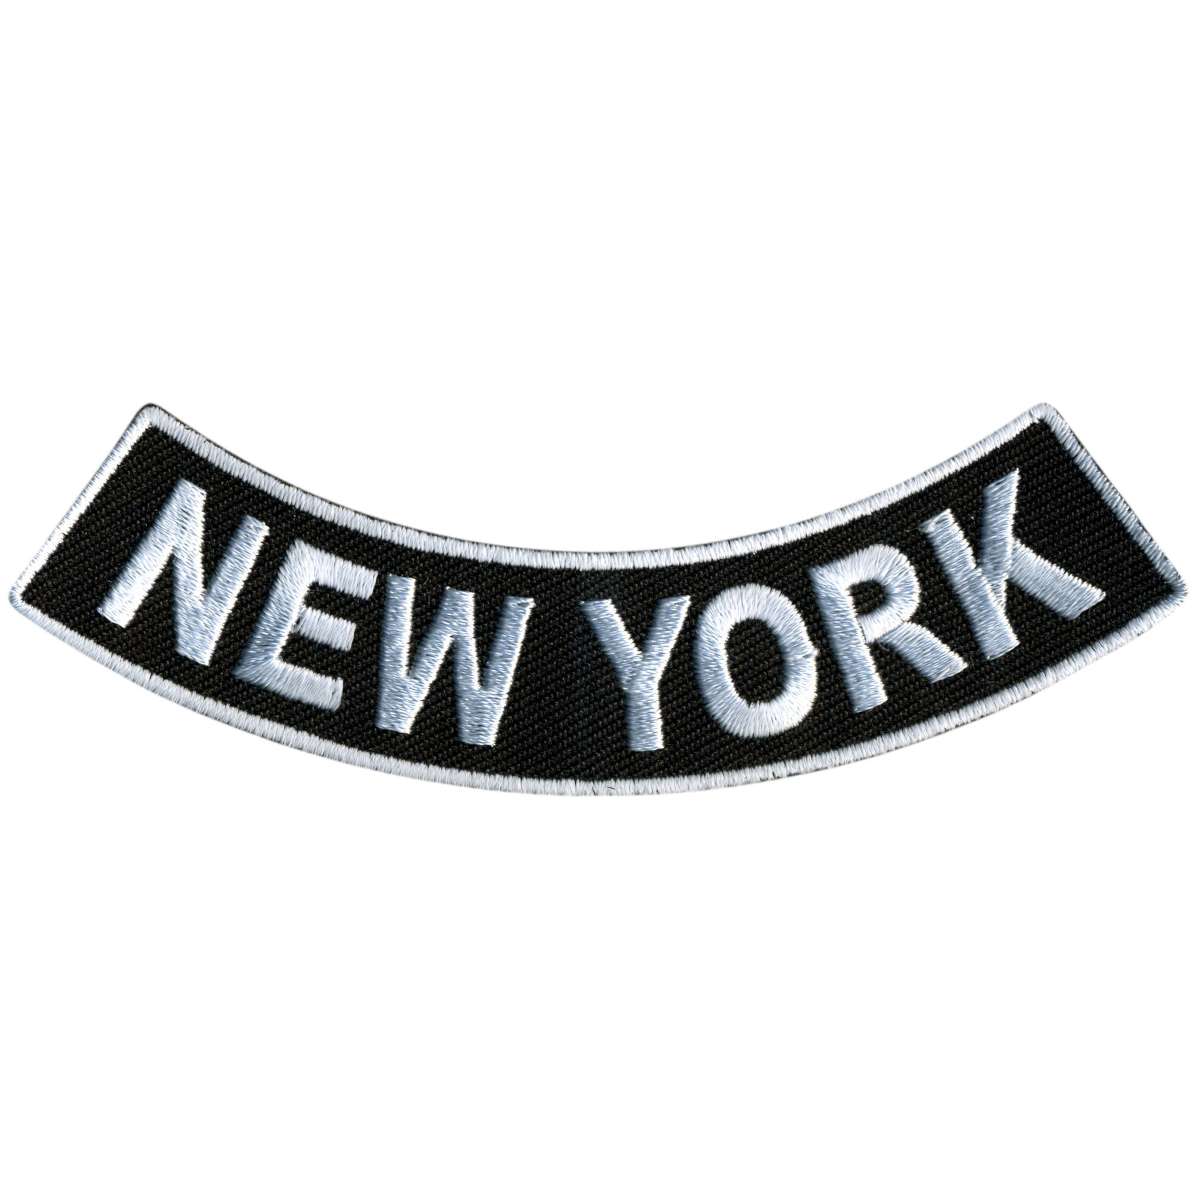 Hot Leathers New York 4” X 1” Bottom Rocker Patch PPM5064